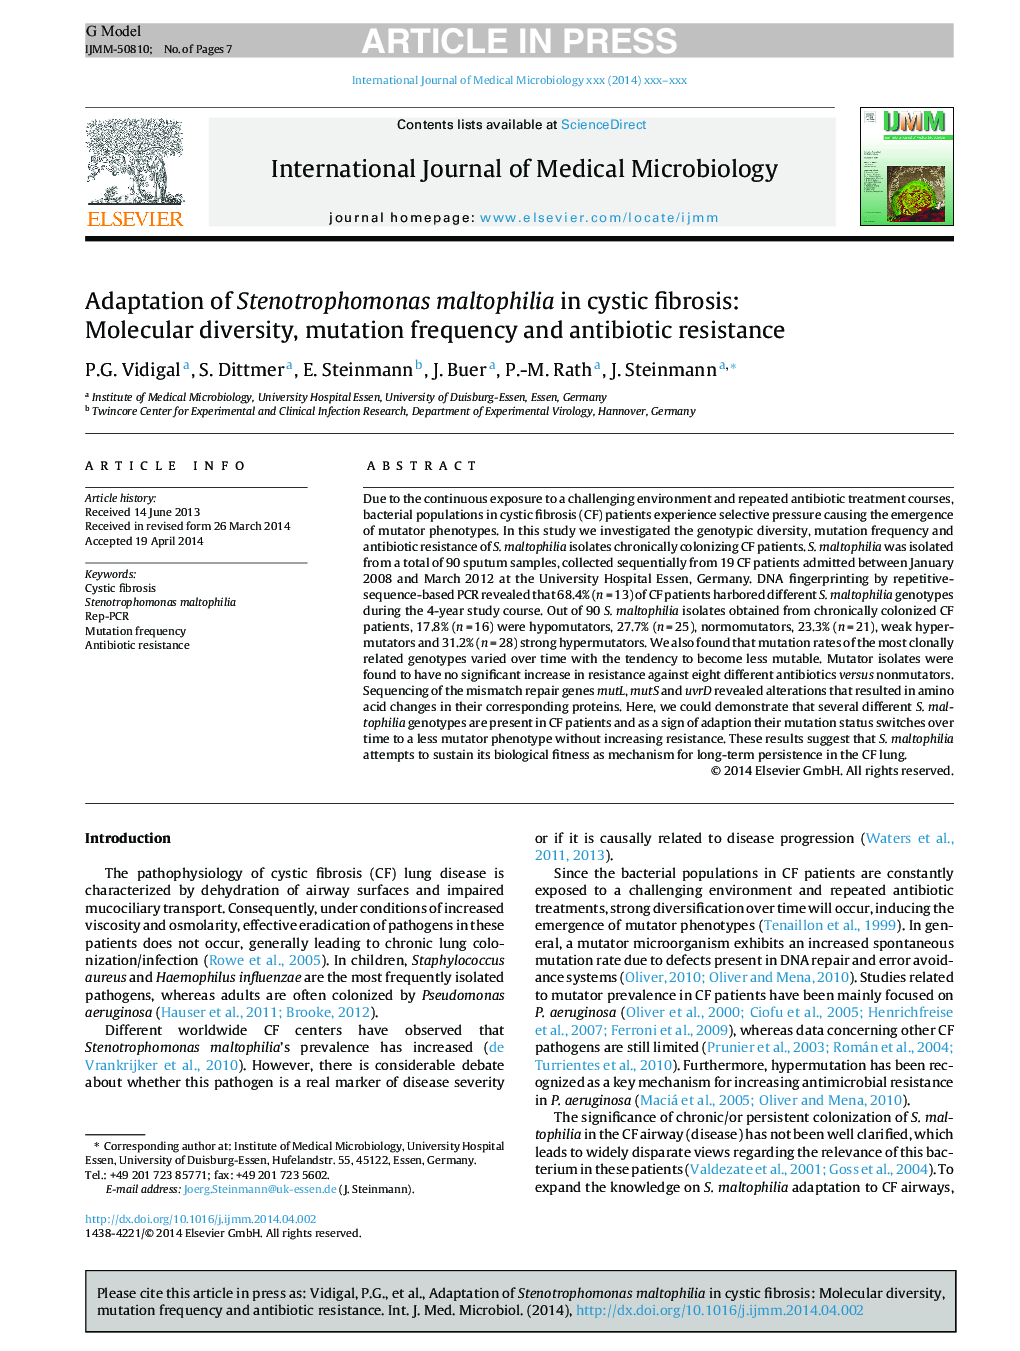 Adaptation of Stenotrophomonas maltophilia in cystic fibrosis: Molecular diversity, mutation frequency and antibiotic resistance